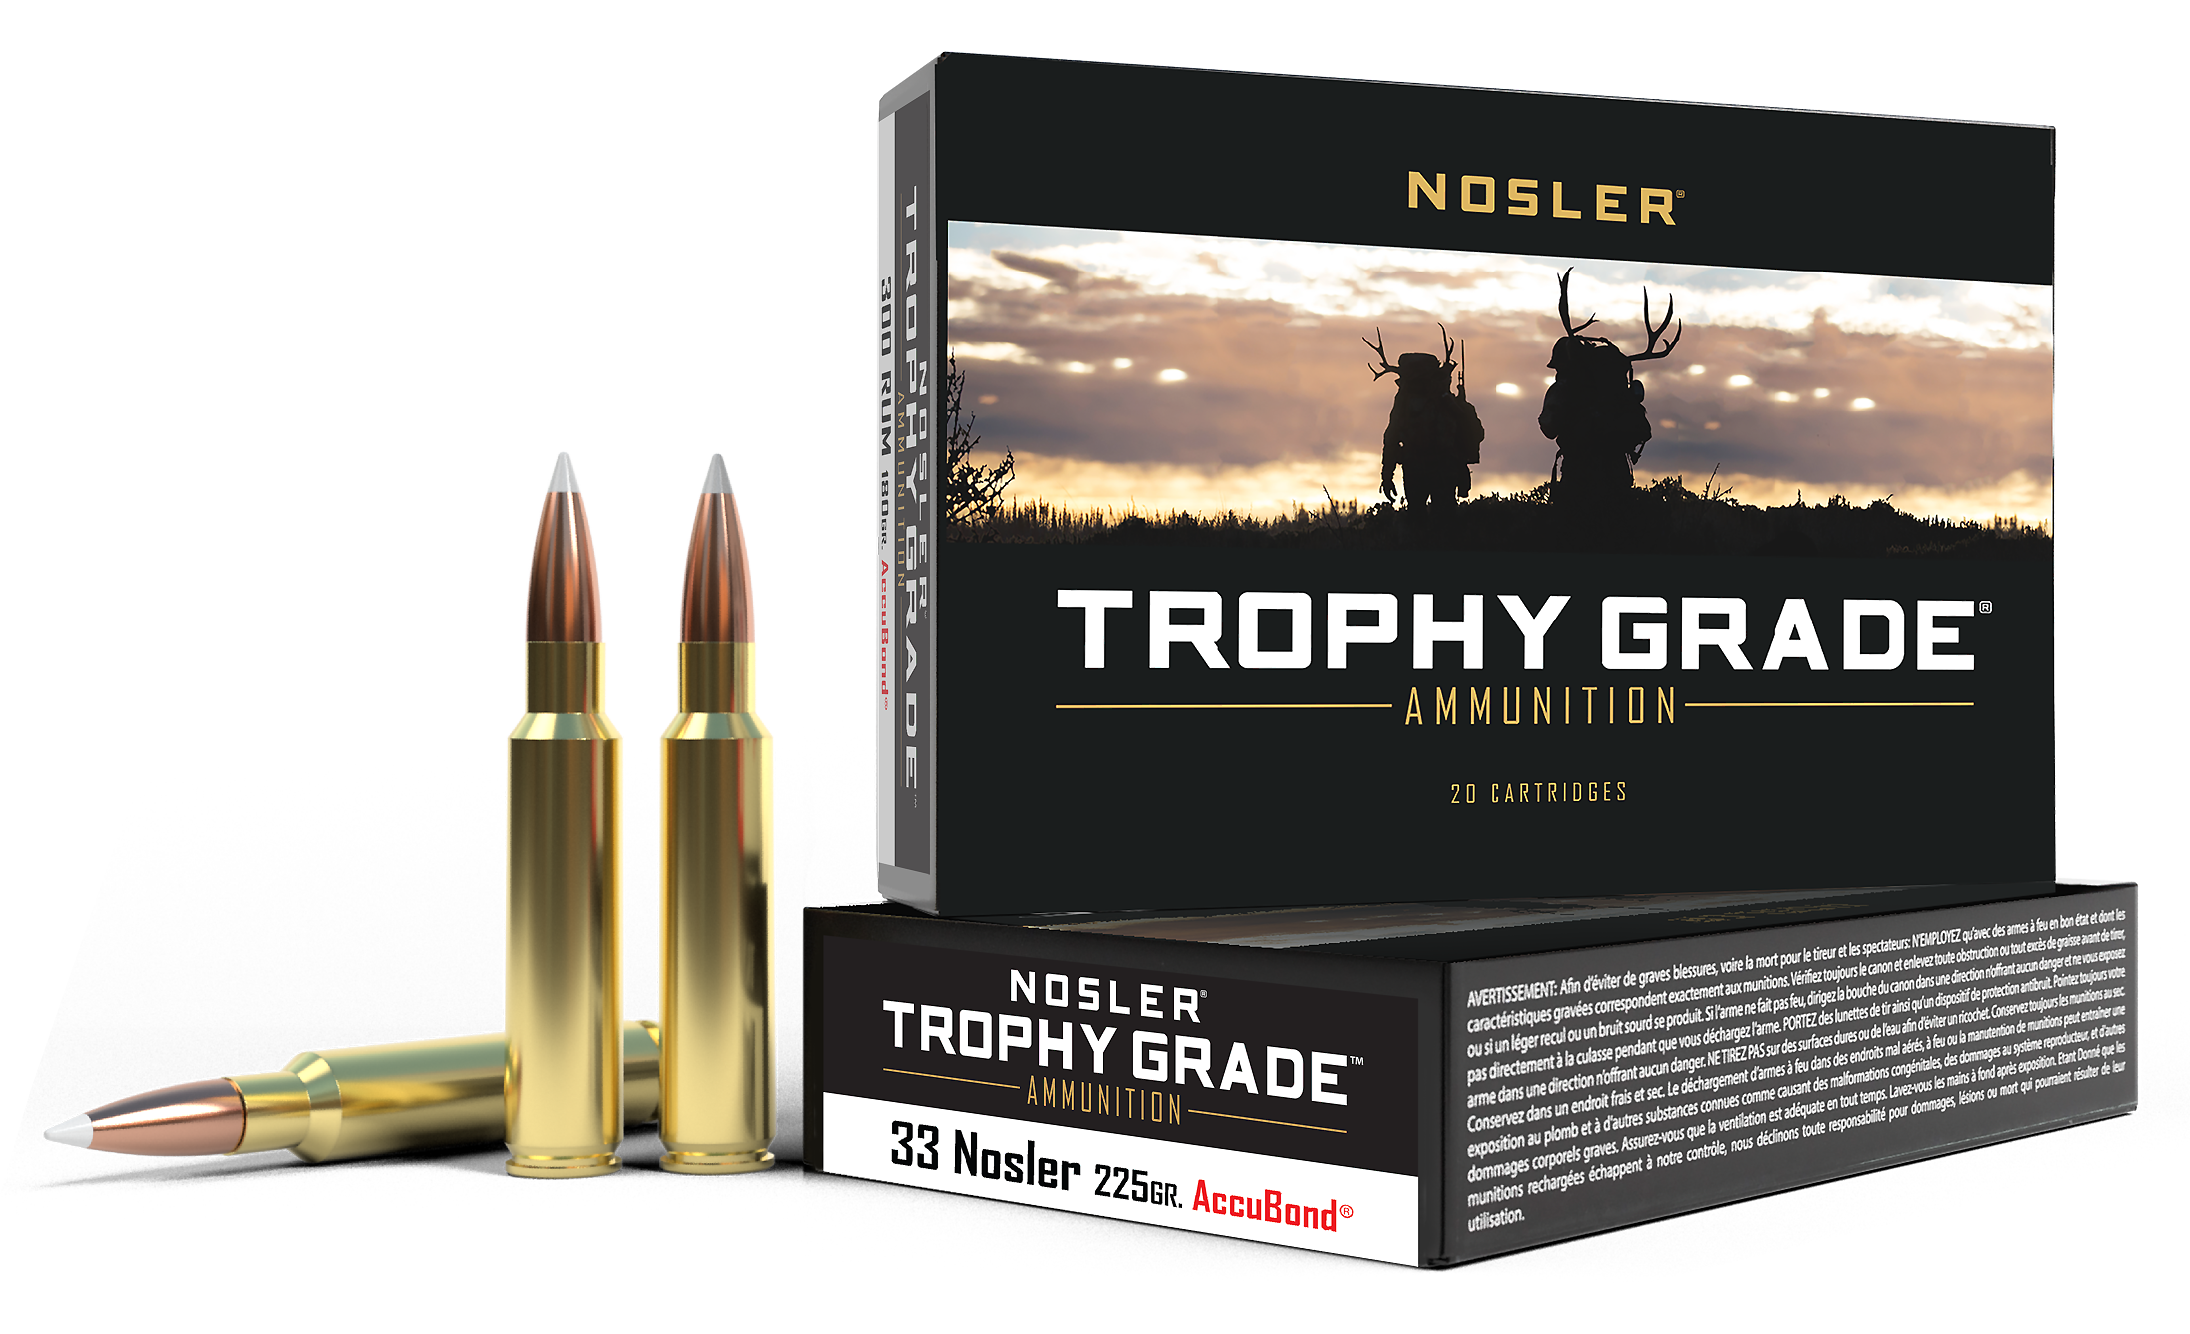 Nosler Trophy Grade Centerfire Rifle Ammo - .33 Nosler